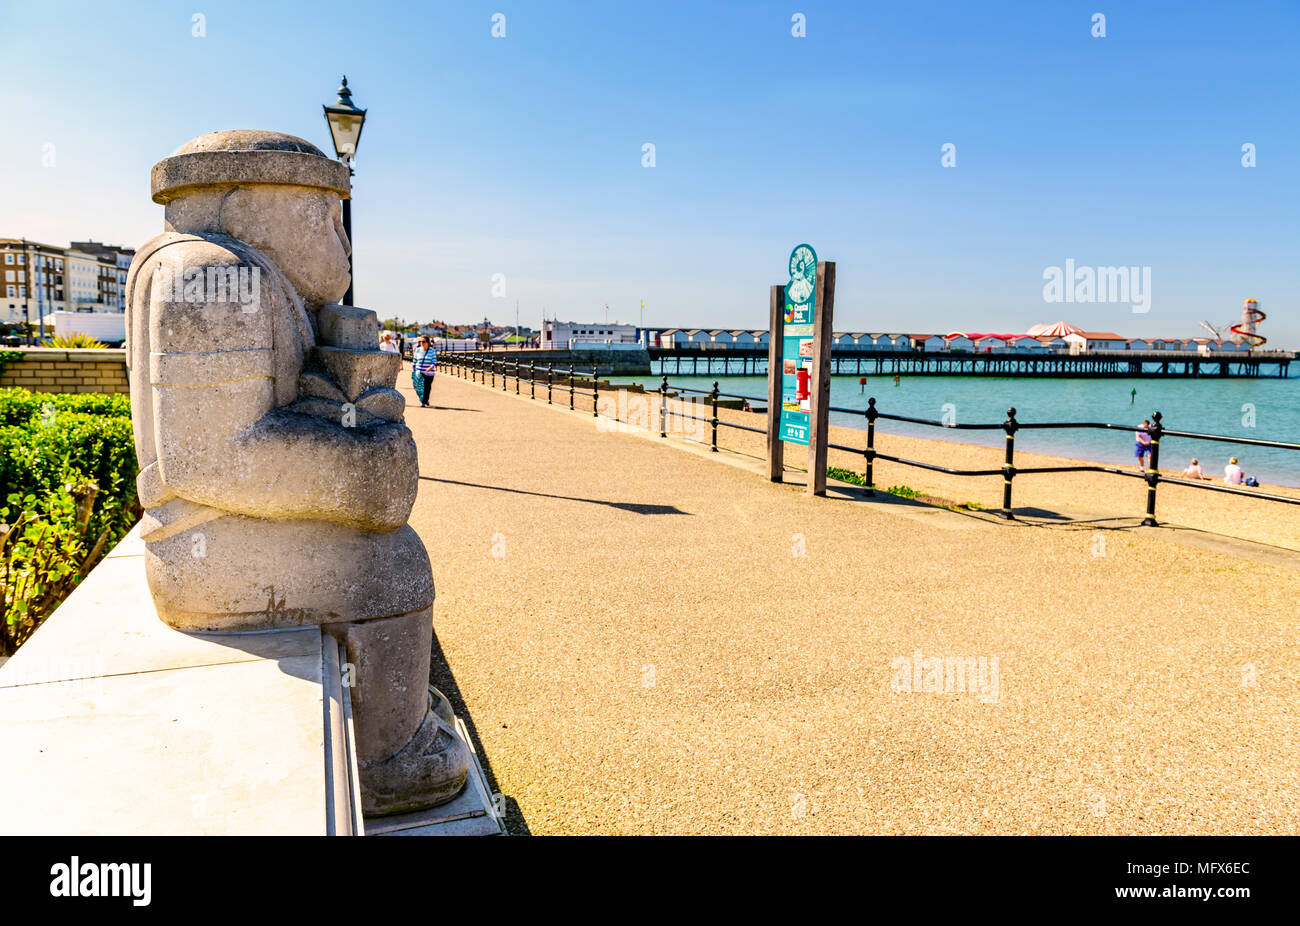 Statue regardant la mer sur la promenade, Herne bay Kent Banque D'Images